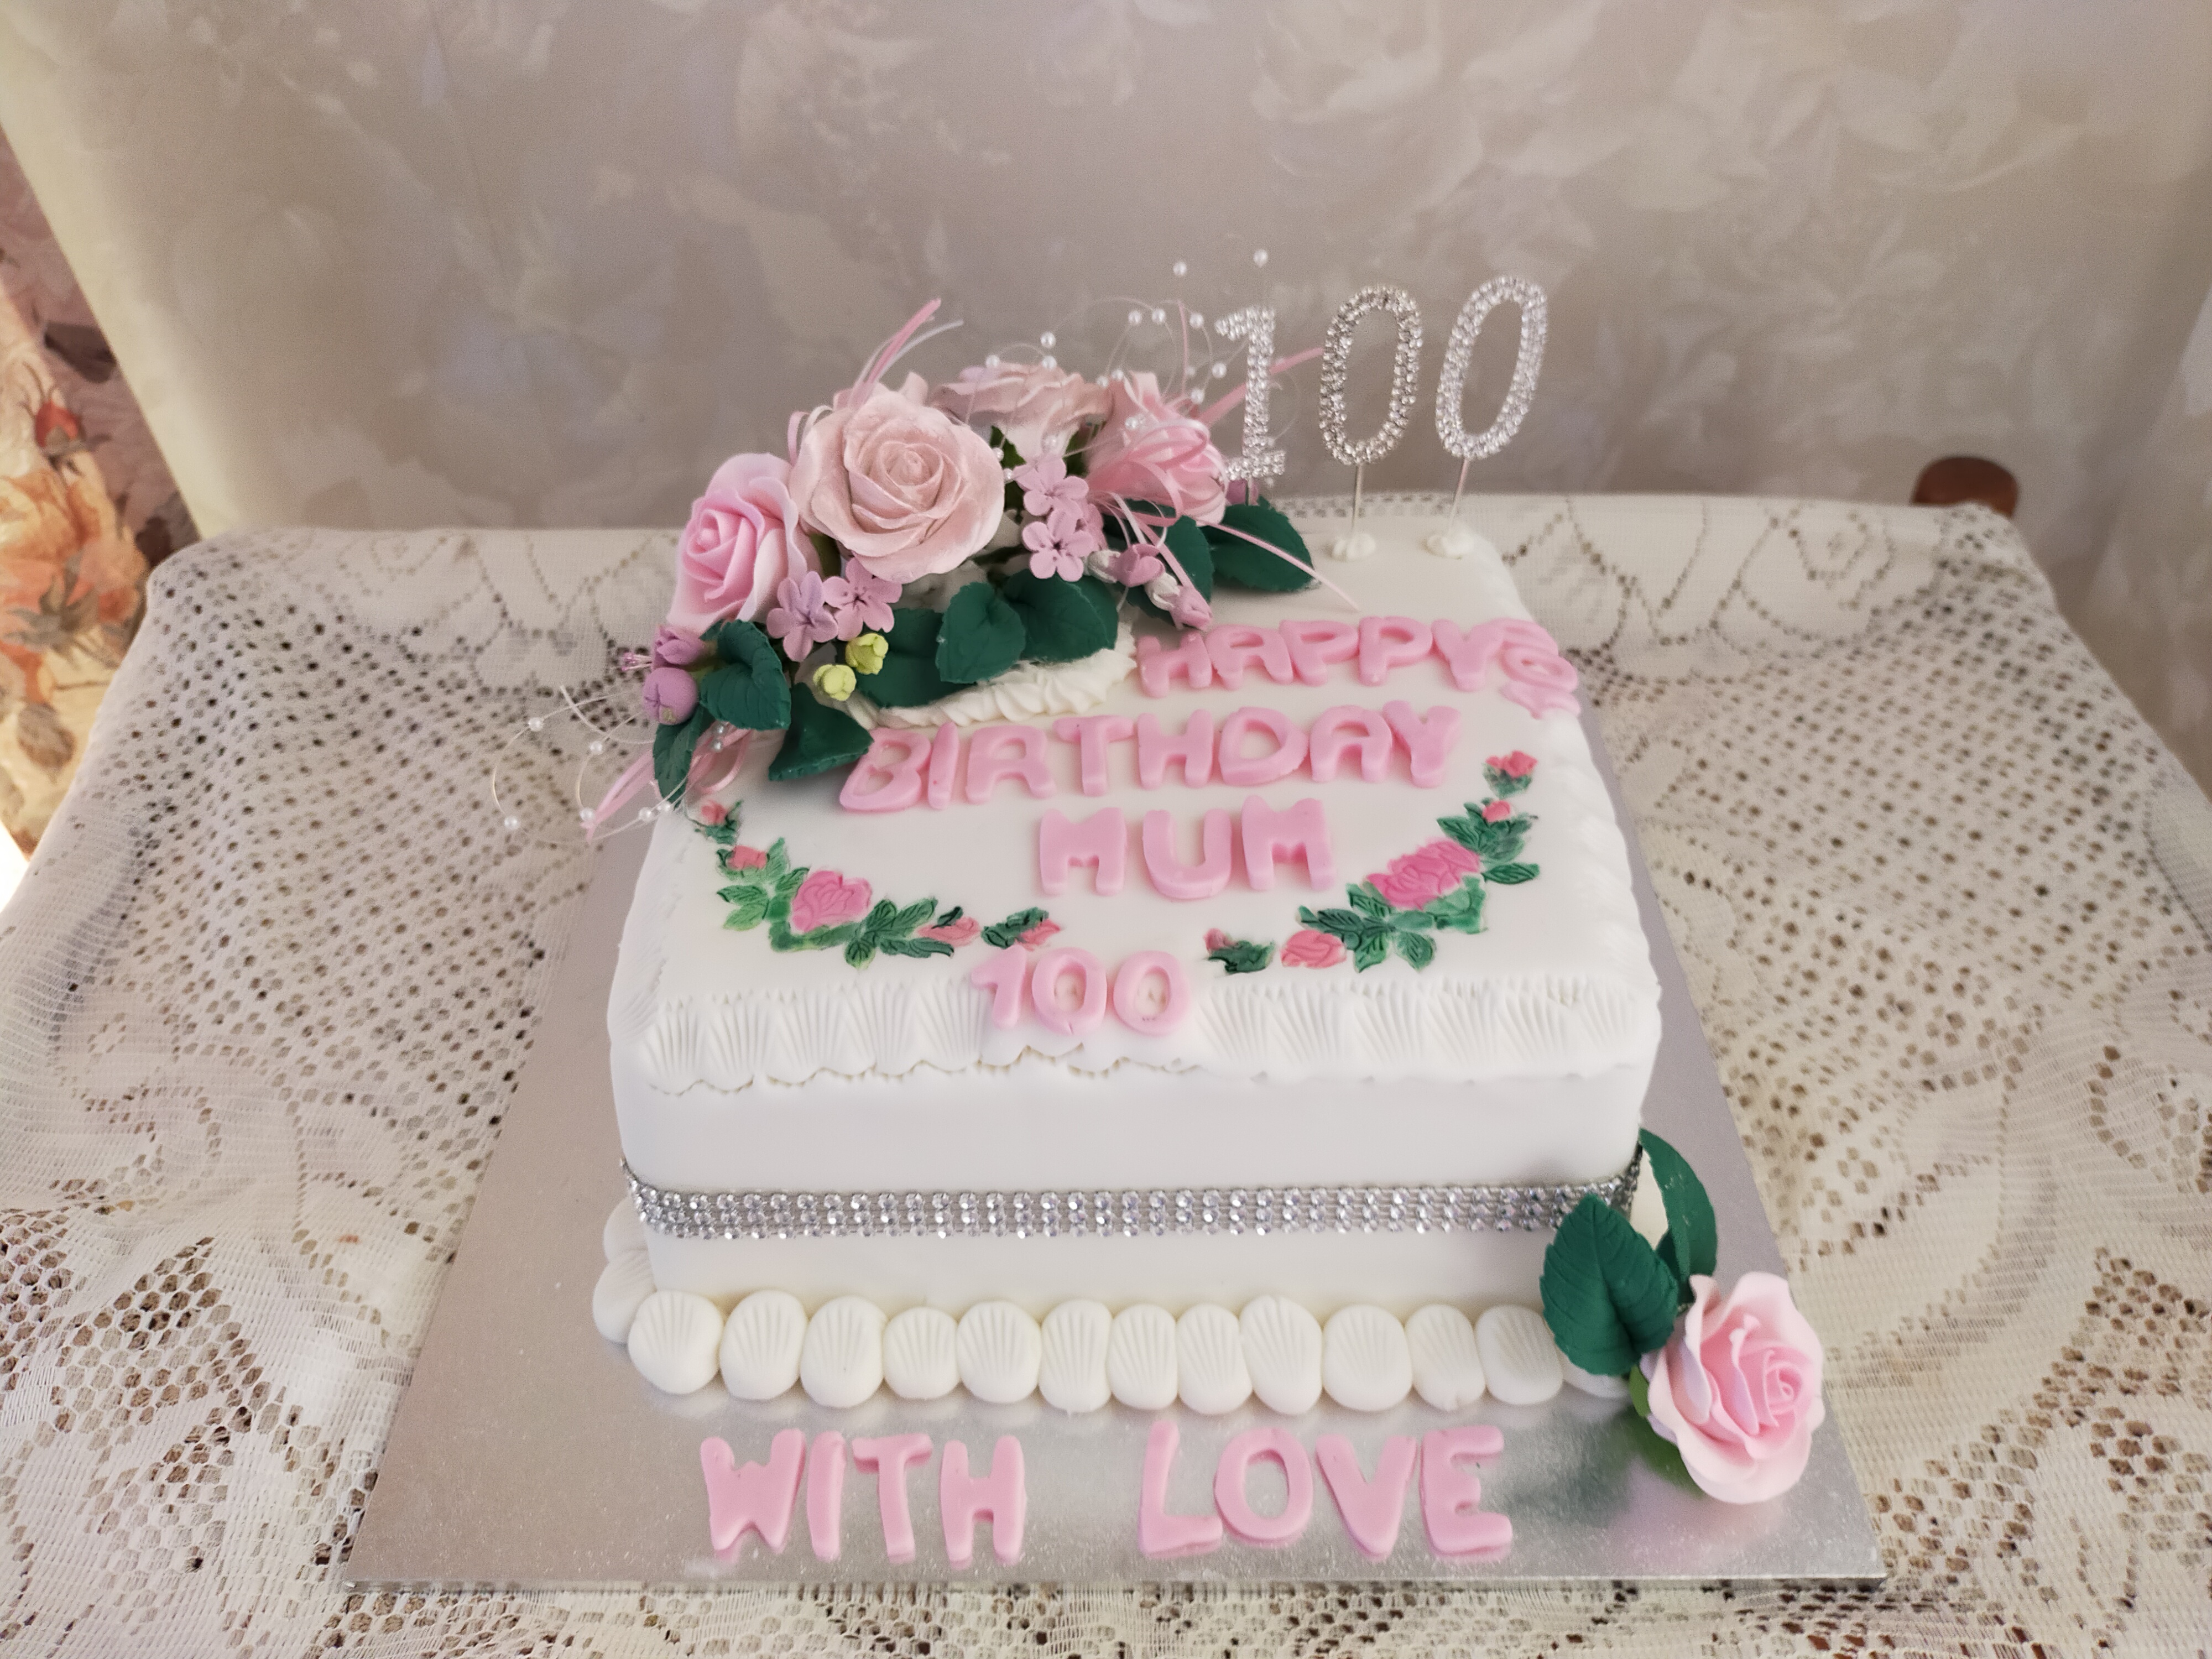 100th-Birthday-cake-closer-view-Barbara-Gillies-9th-August-2022